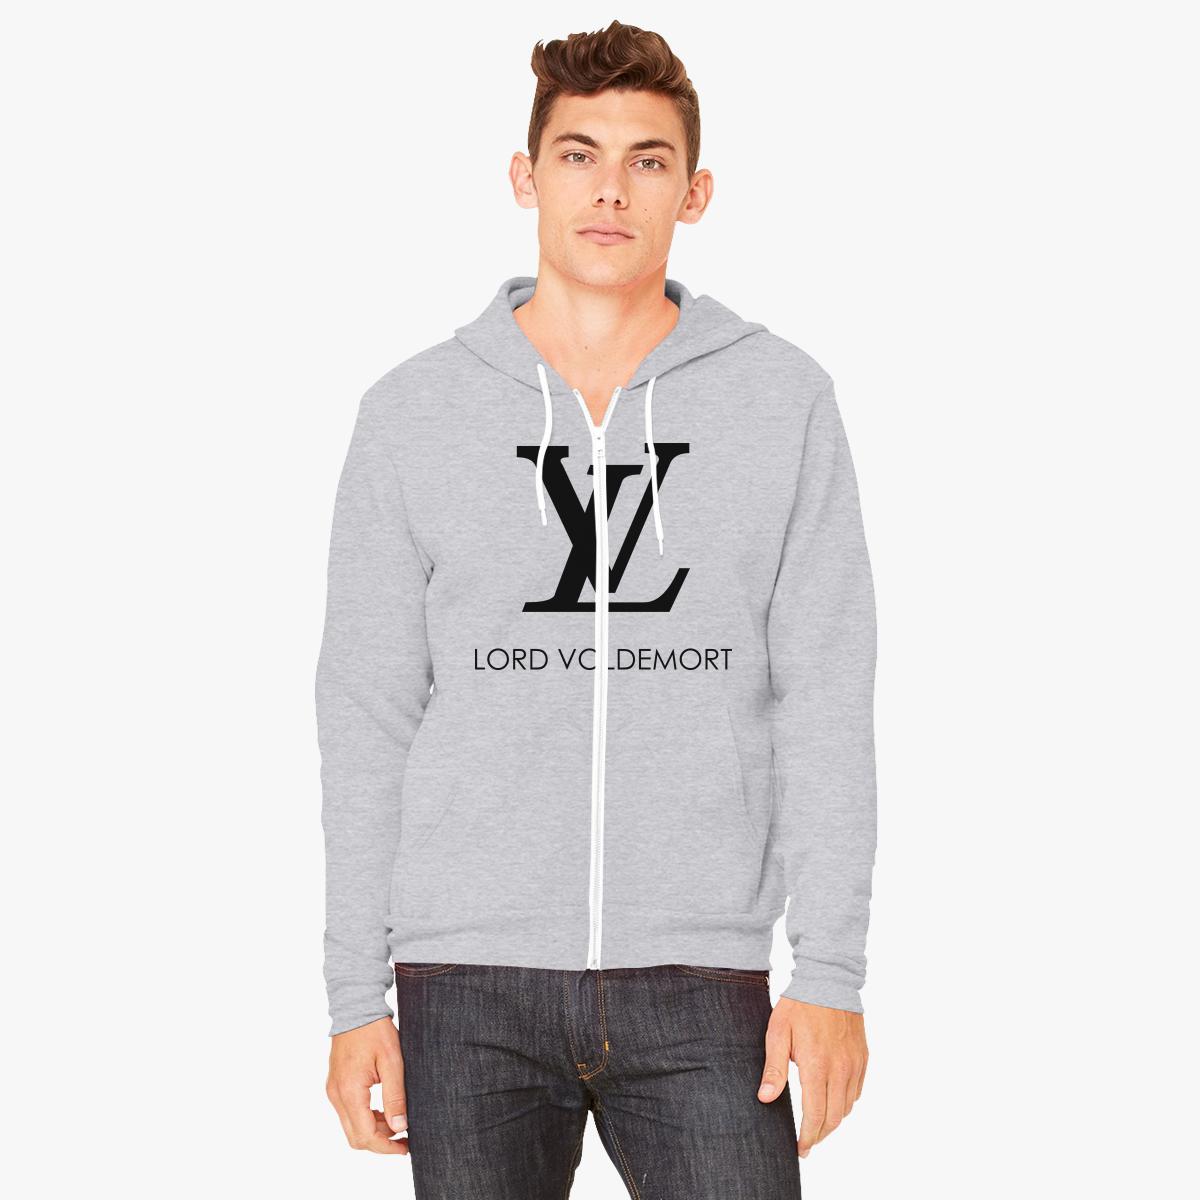 Louis Vuitton by Lord Voldemort Zip-Up Hoodie